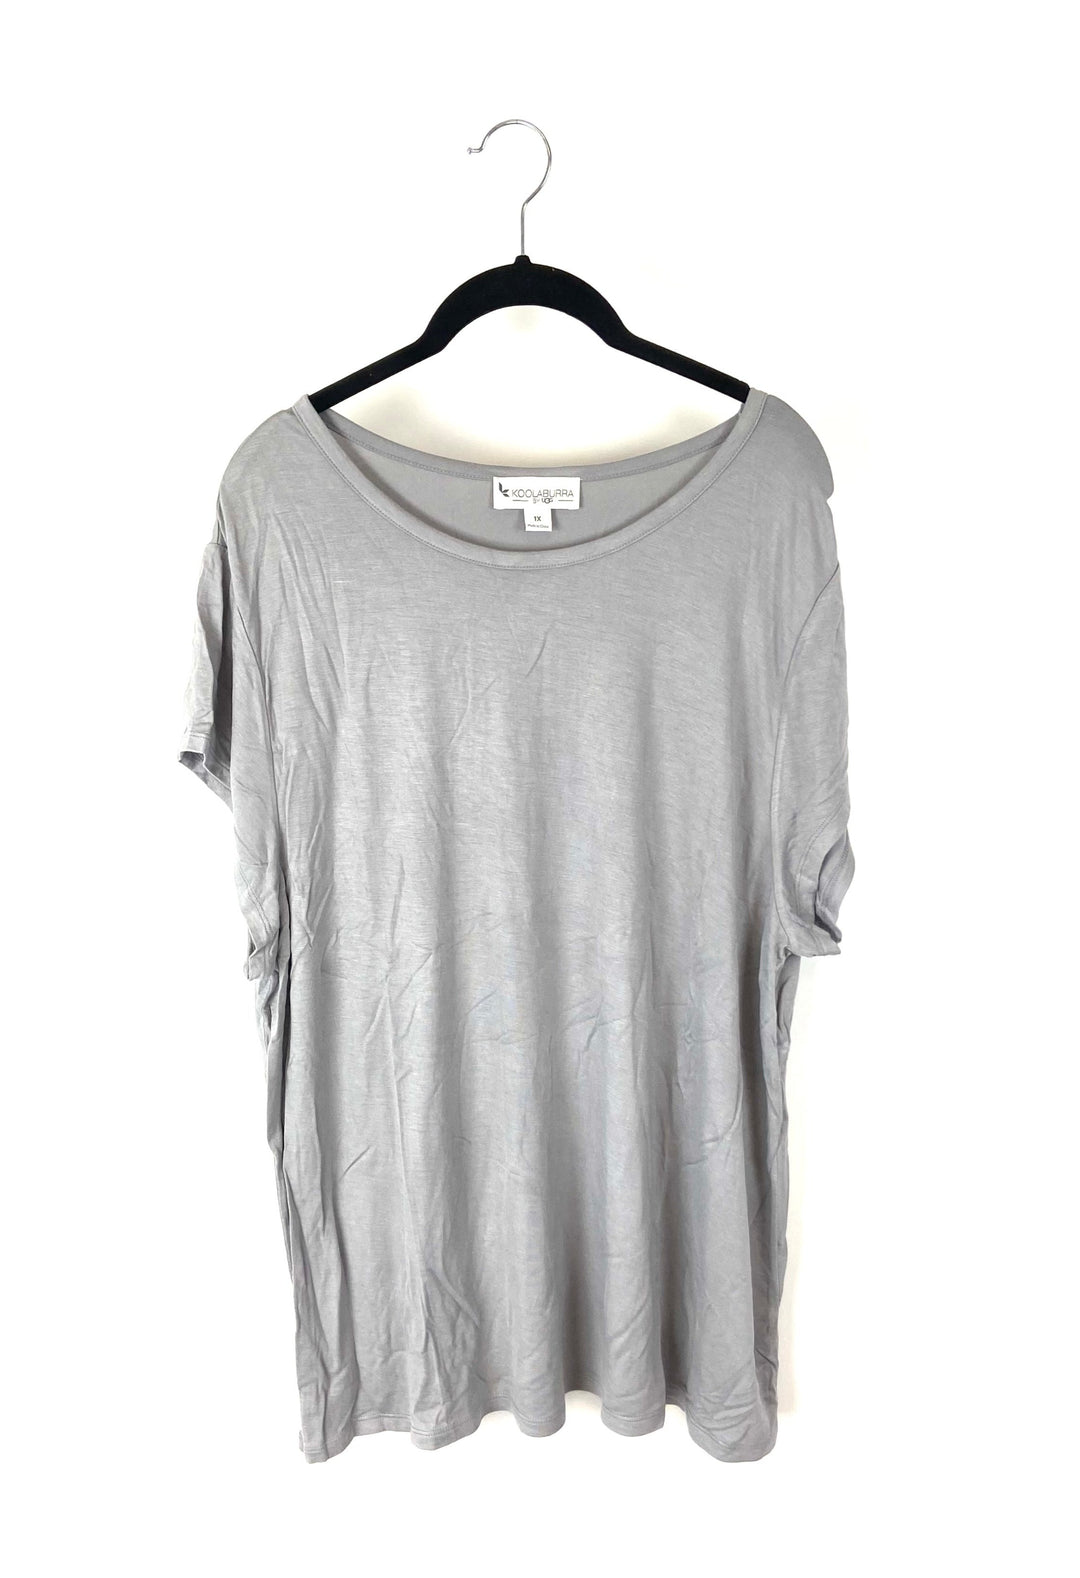 Light Grey T- Shirt - 1X